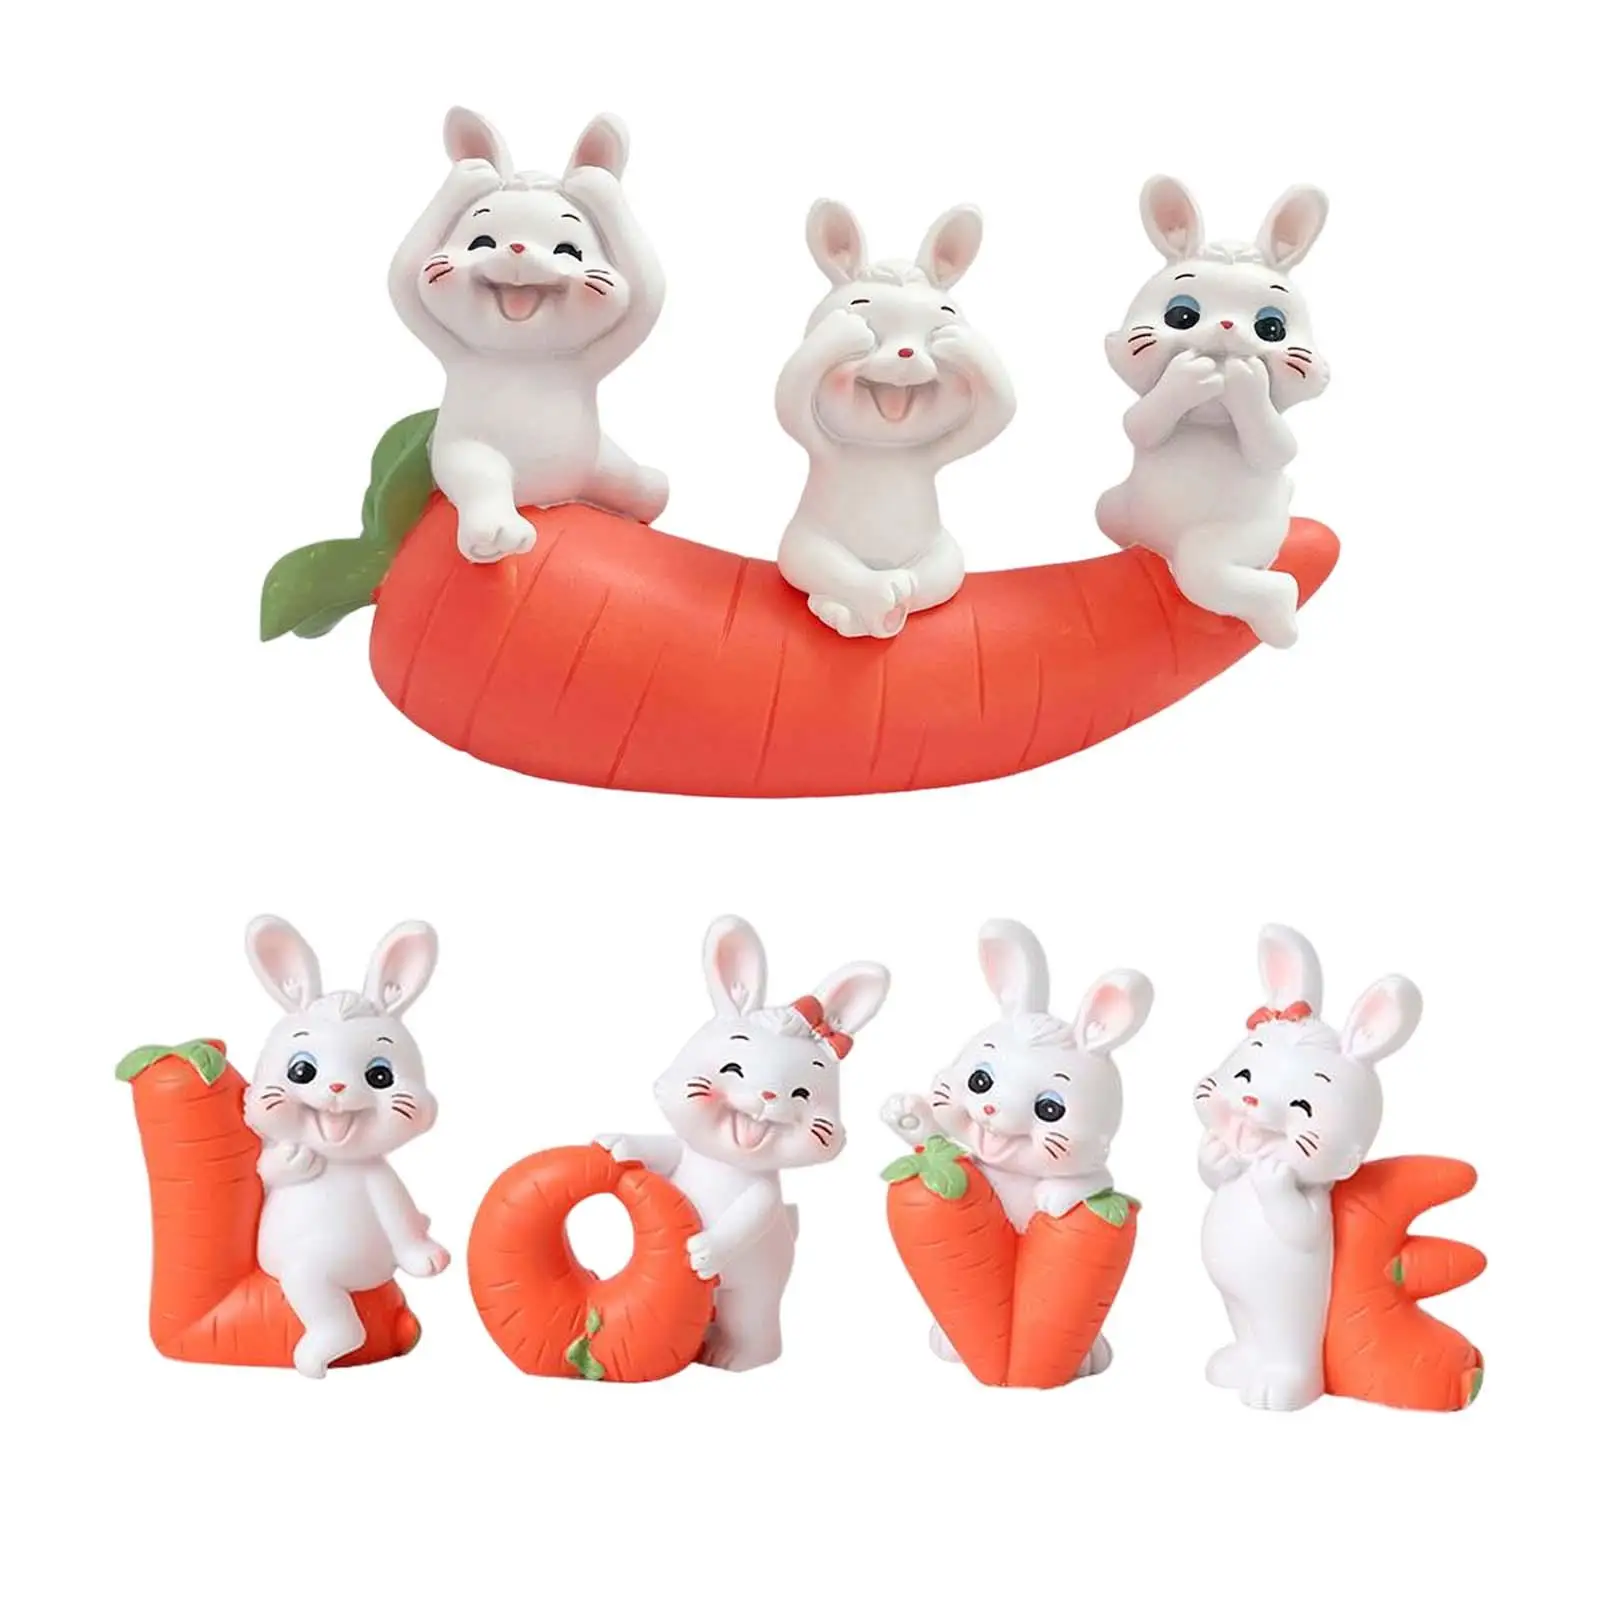 Carrot Bunny Figurines Animal Figures Rabbit Statue for Shelf Car Dashboard